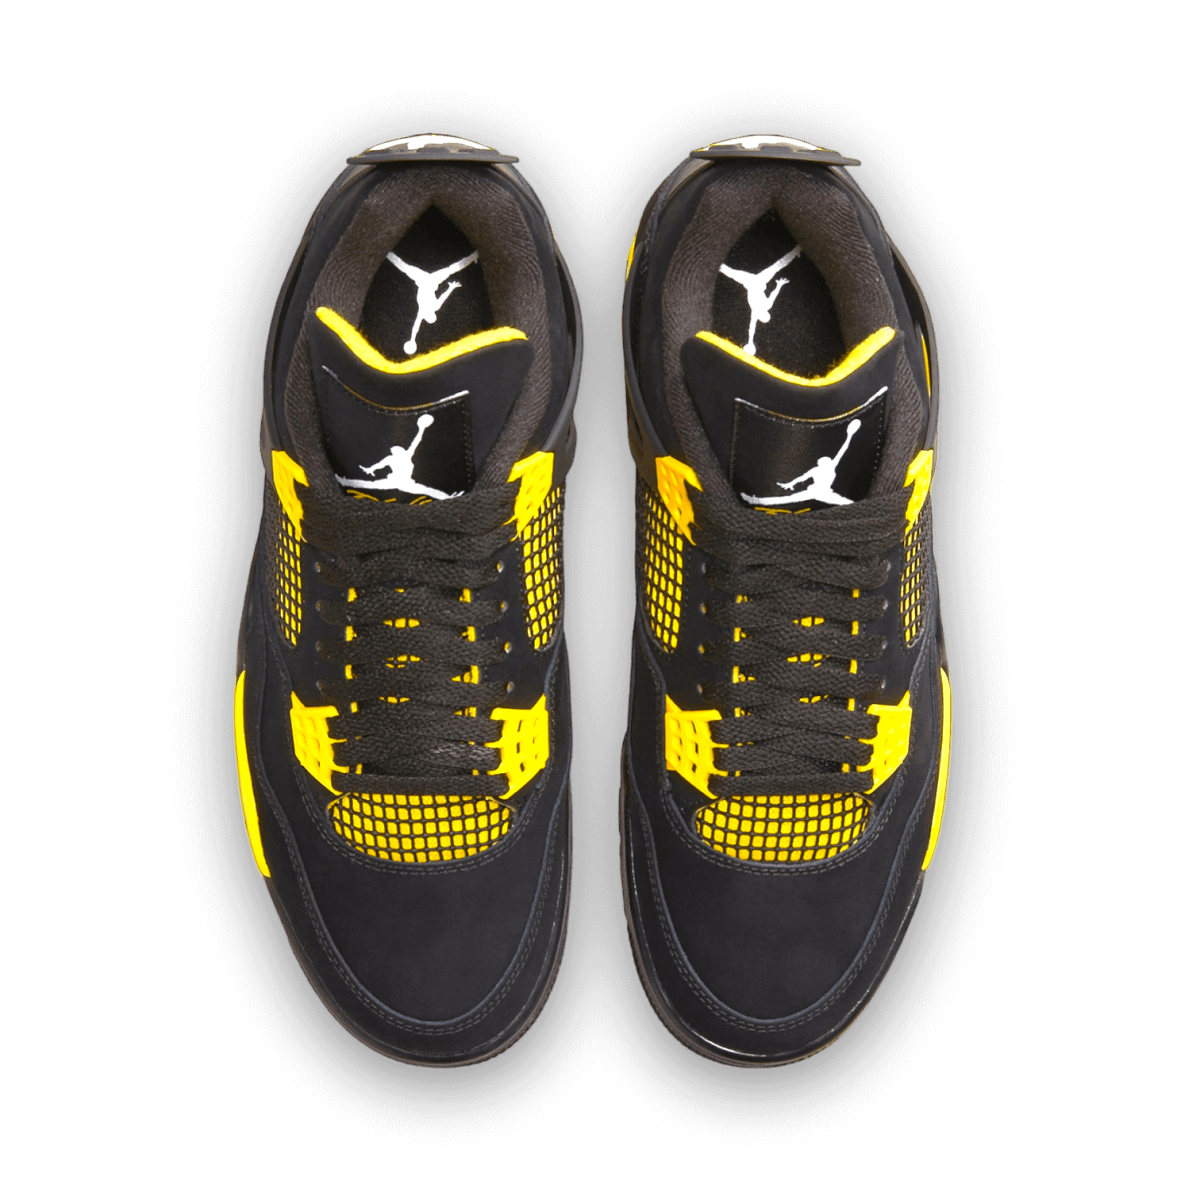 Air Jordan 4 Retro Yellow & Black 'Thunder' 2023 - Mid Sneaker - Jawns on Fire Sneakers & Streetwear